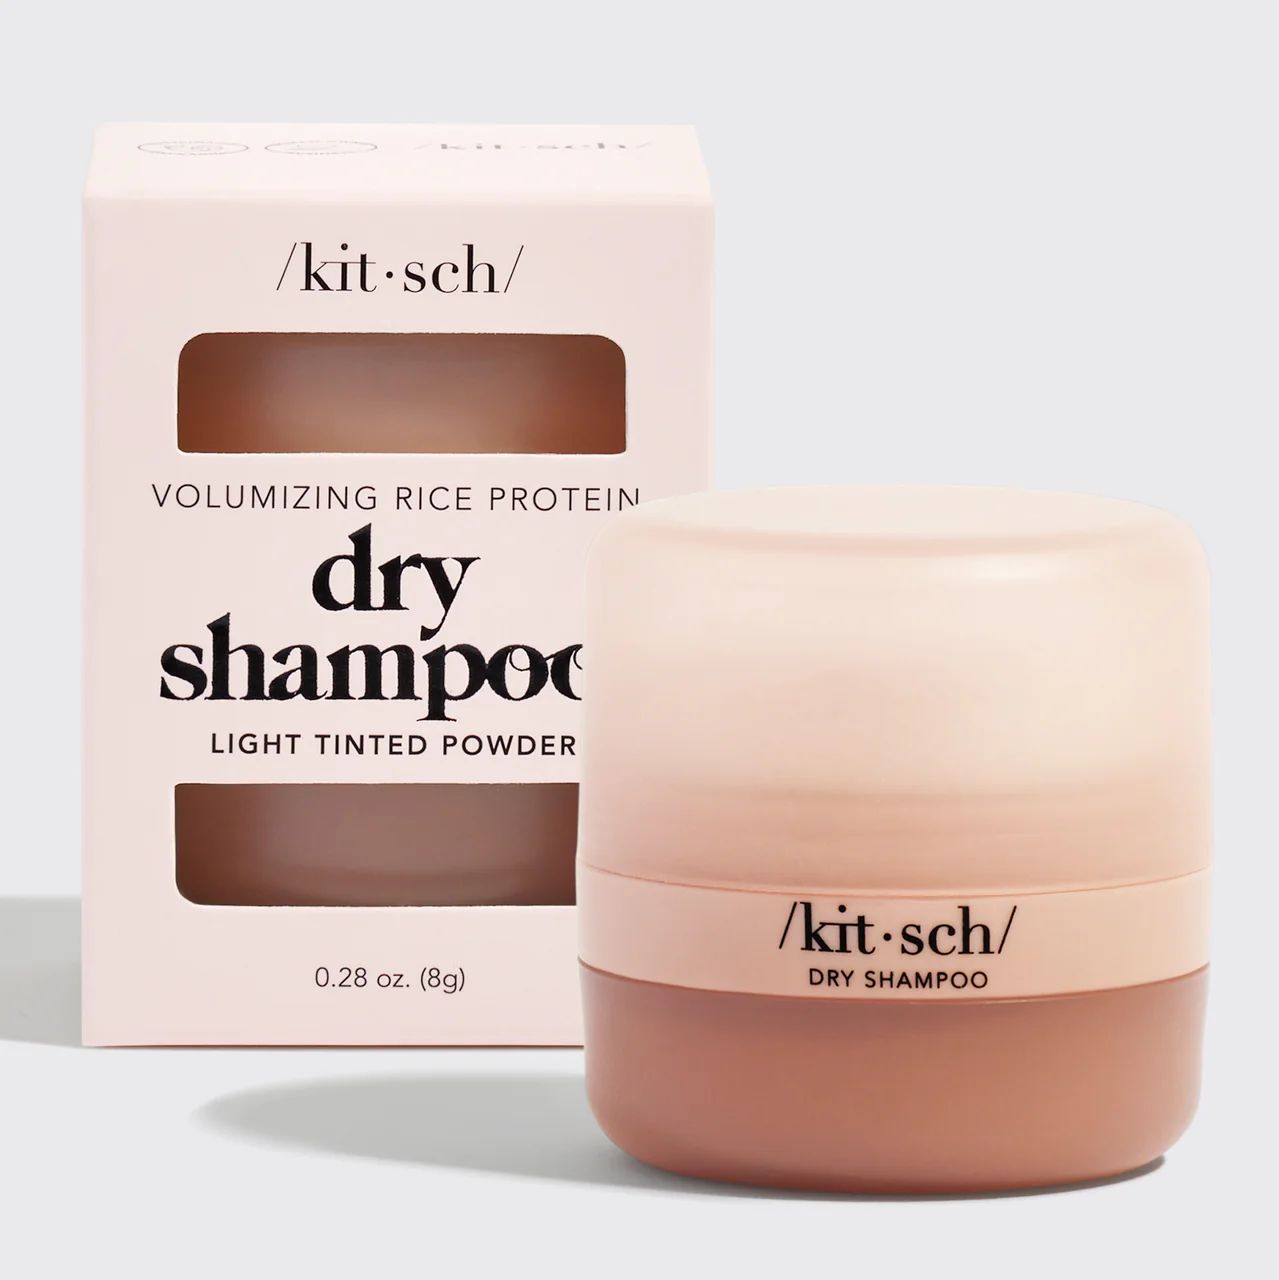 Volumizing Rice Protein Dry Shampoo | Kitsch